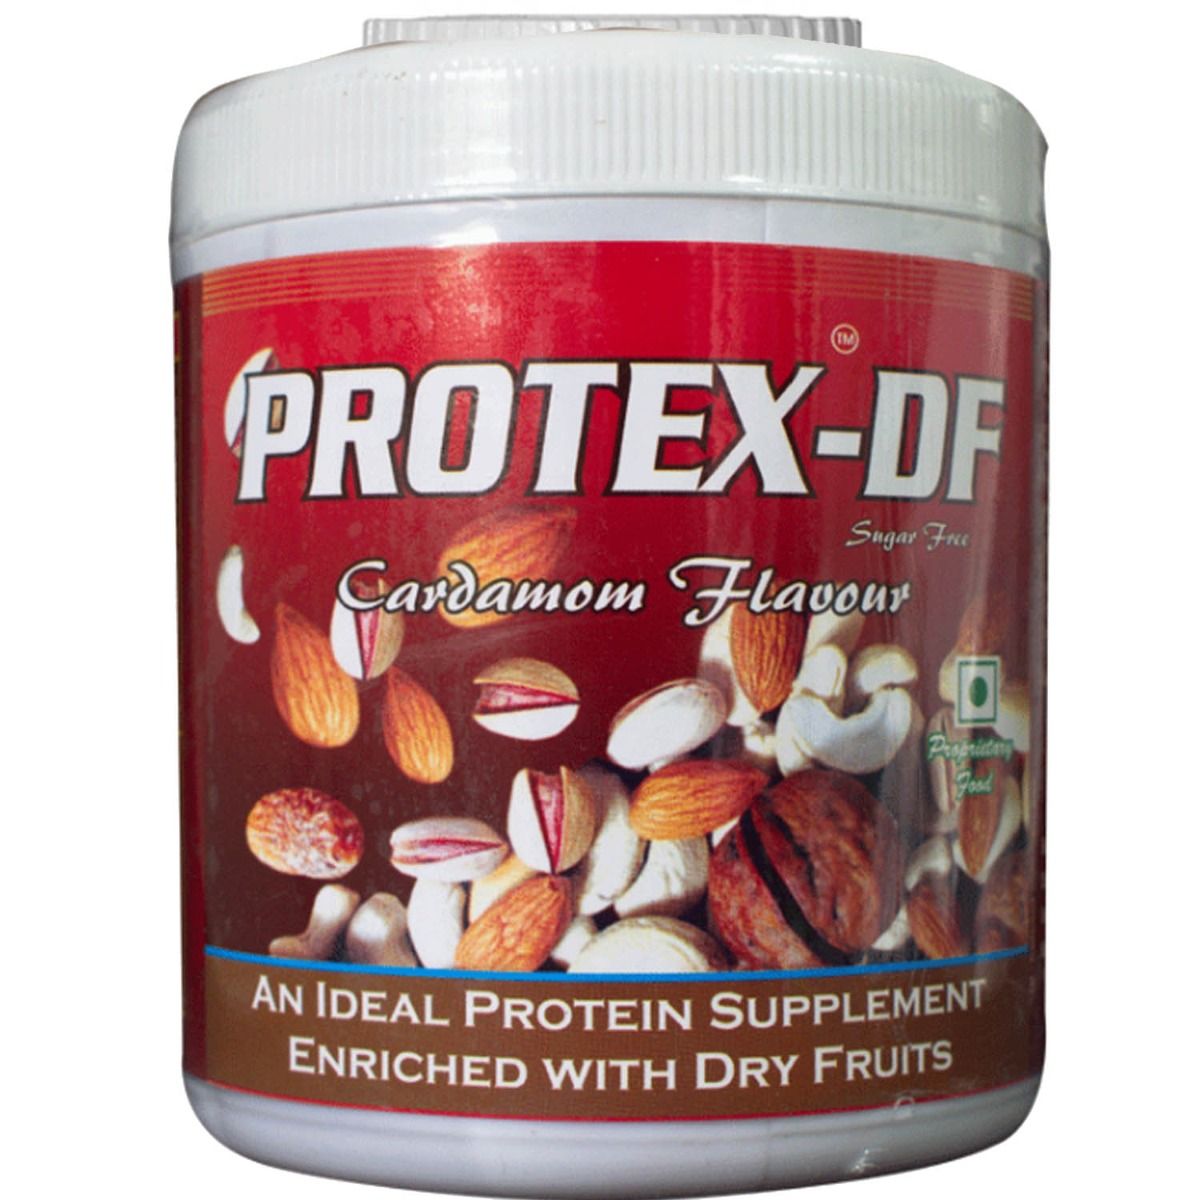 Buy Protex-Df Cardamom Flavoured Powder, 200 gm Online